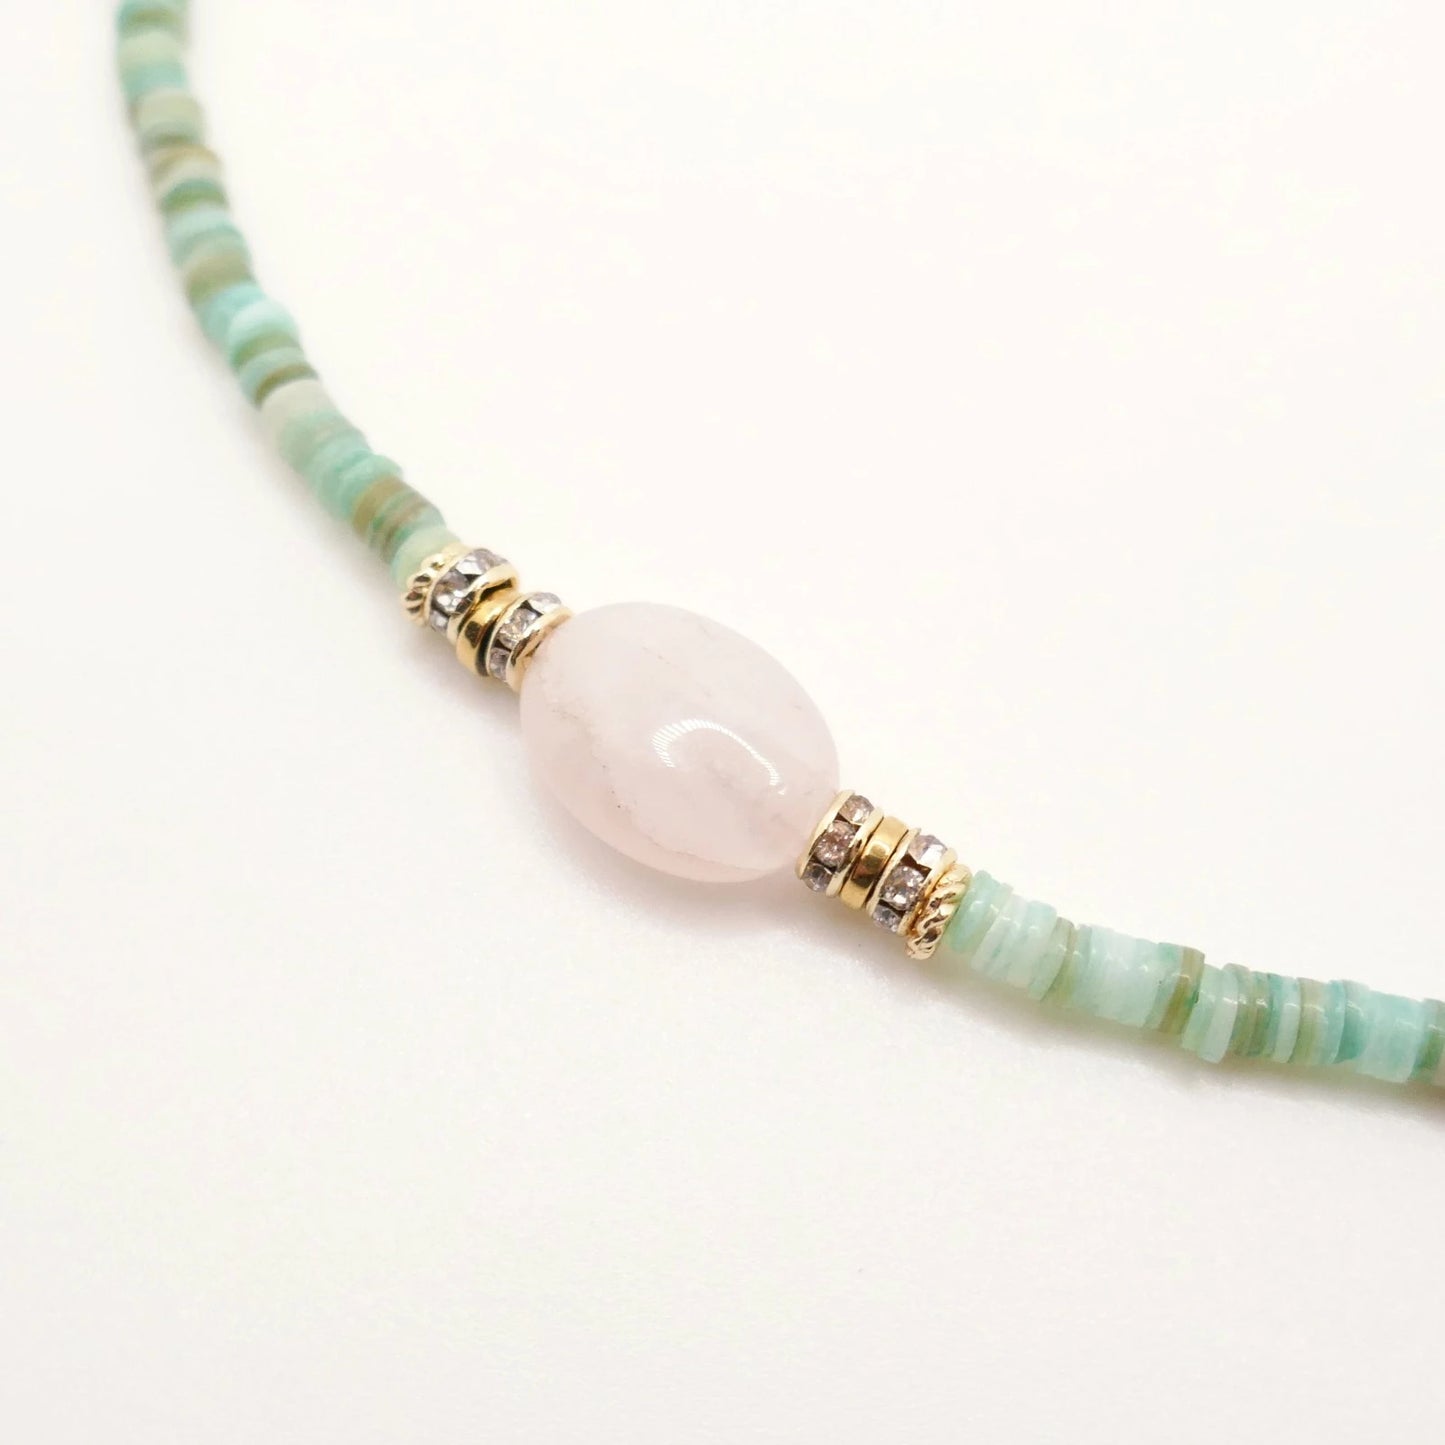 collier vert et rose en perles naturelles heishi et pierre ronde de quartz rose